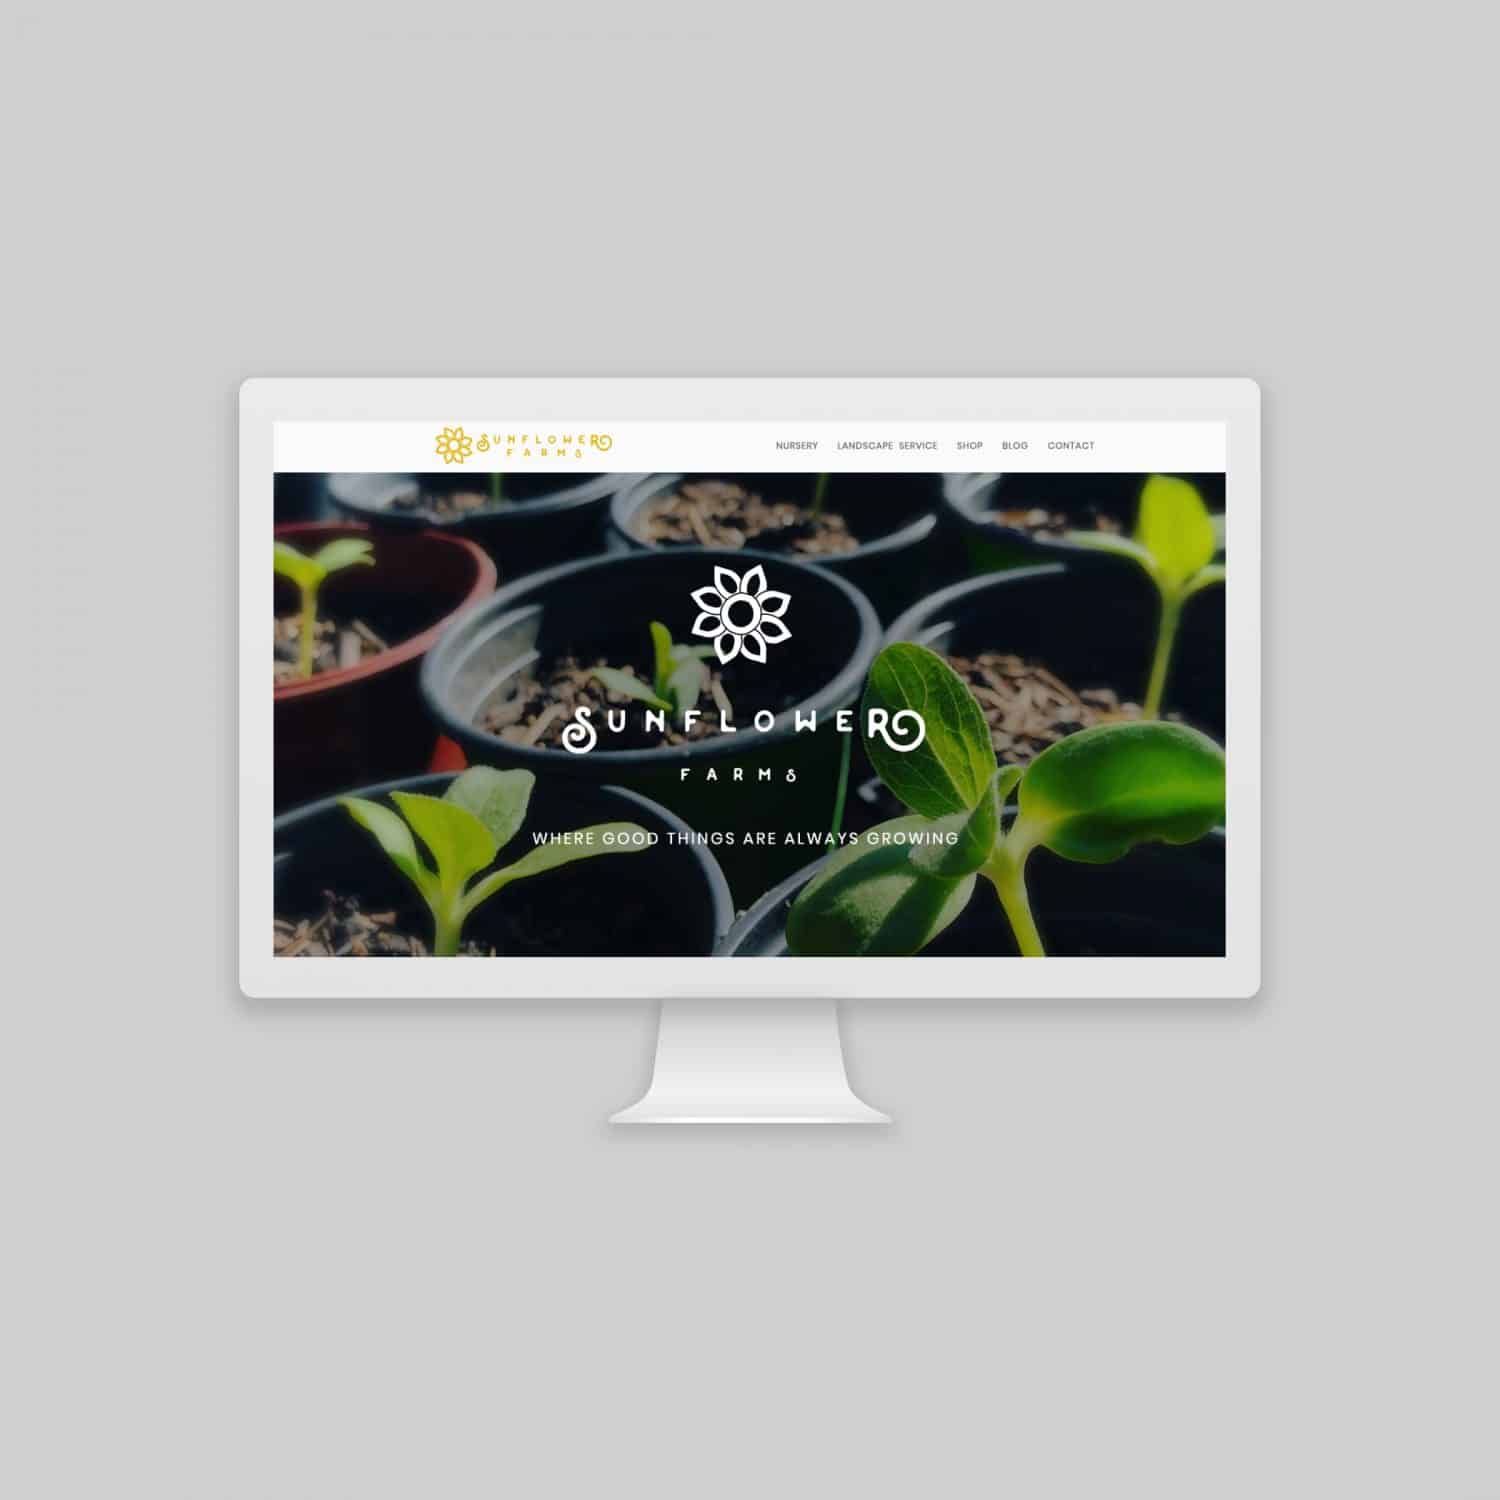 Sunflower Farms Website by Jordis Small of Stellen Design - brand update